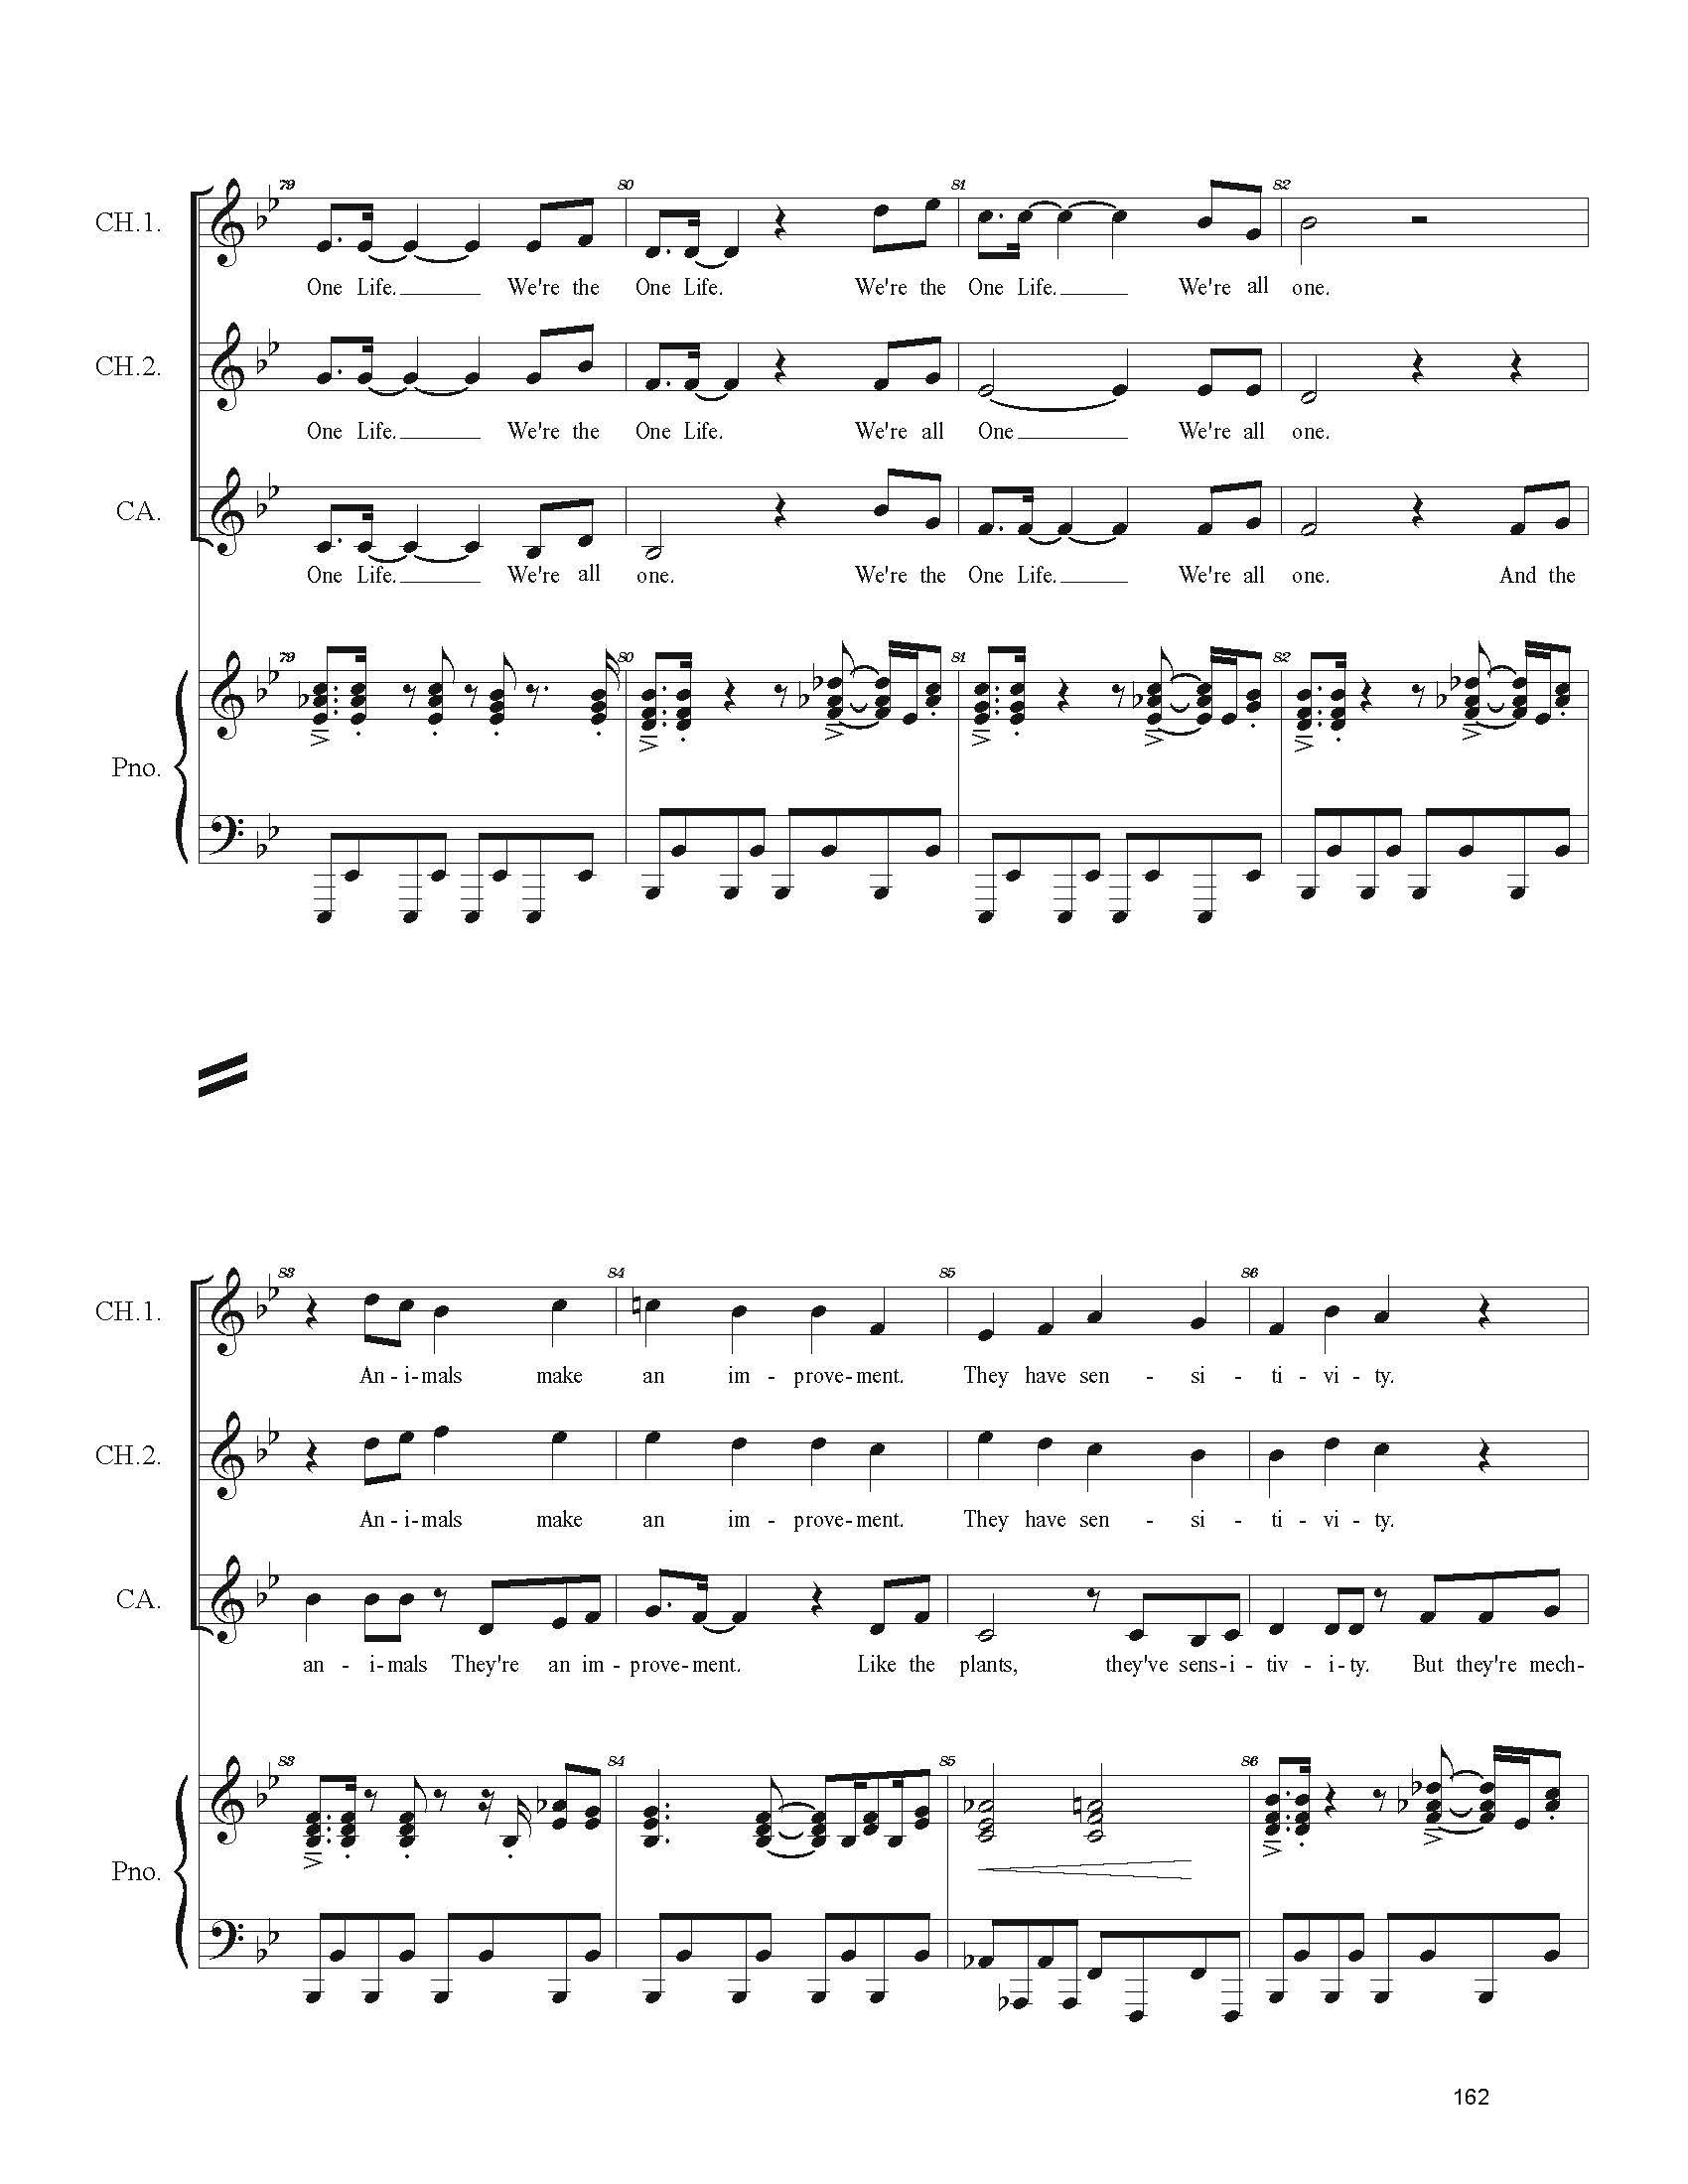 FULL PIANO VOCAL SCORE DRAFT 1 - Score_Page_162.jpg